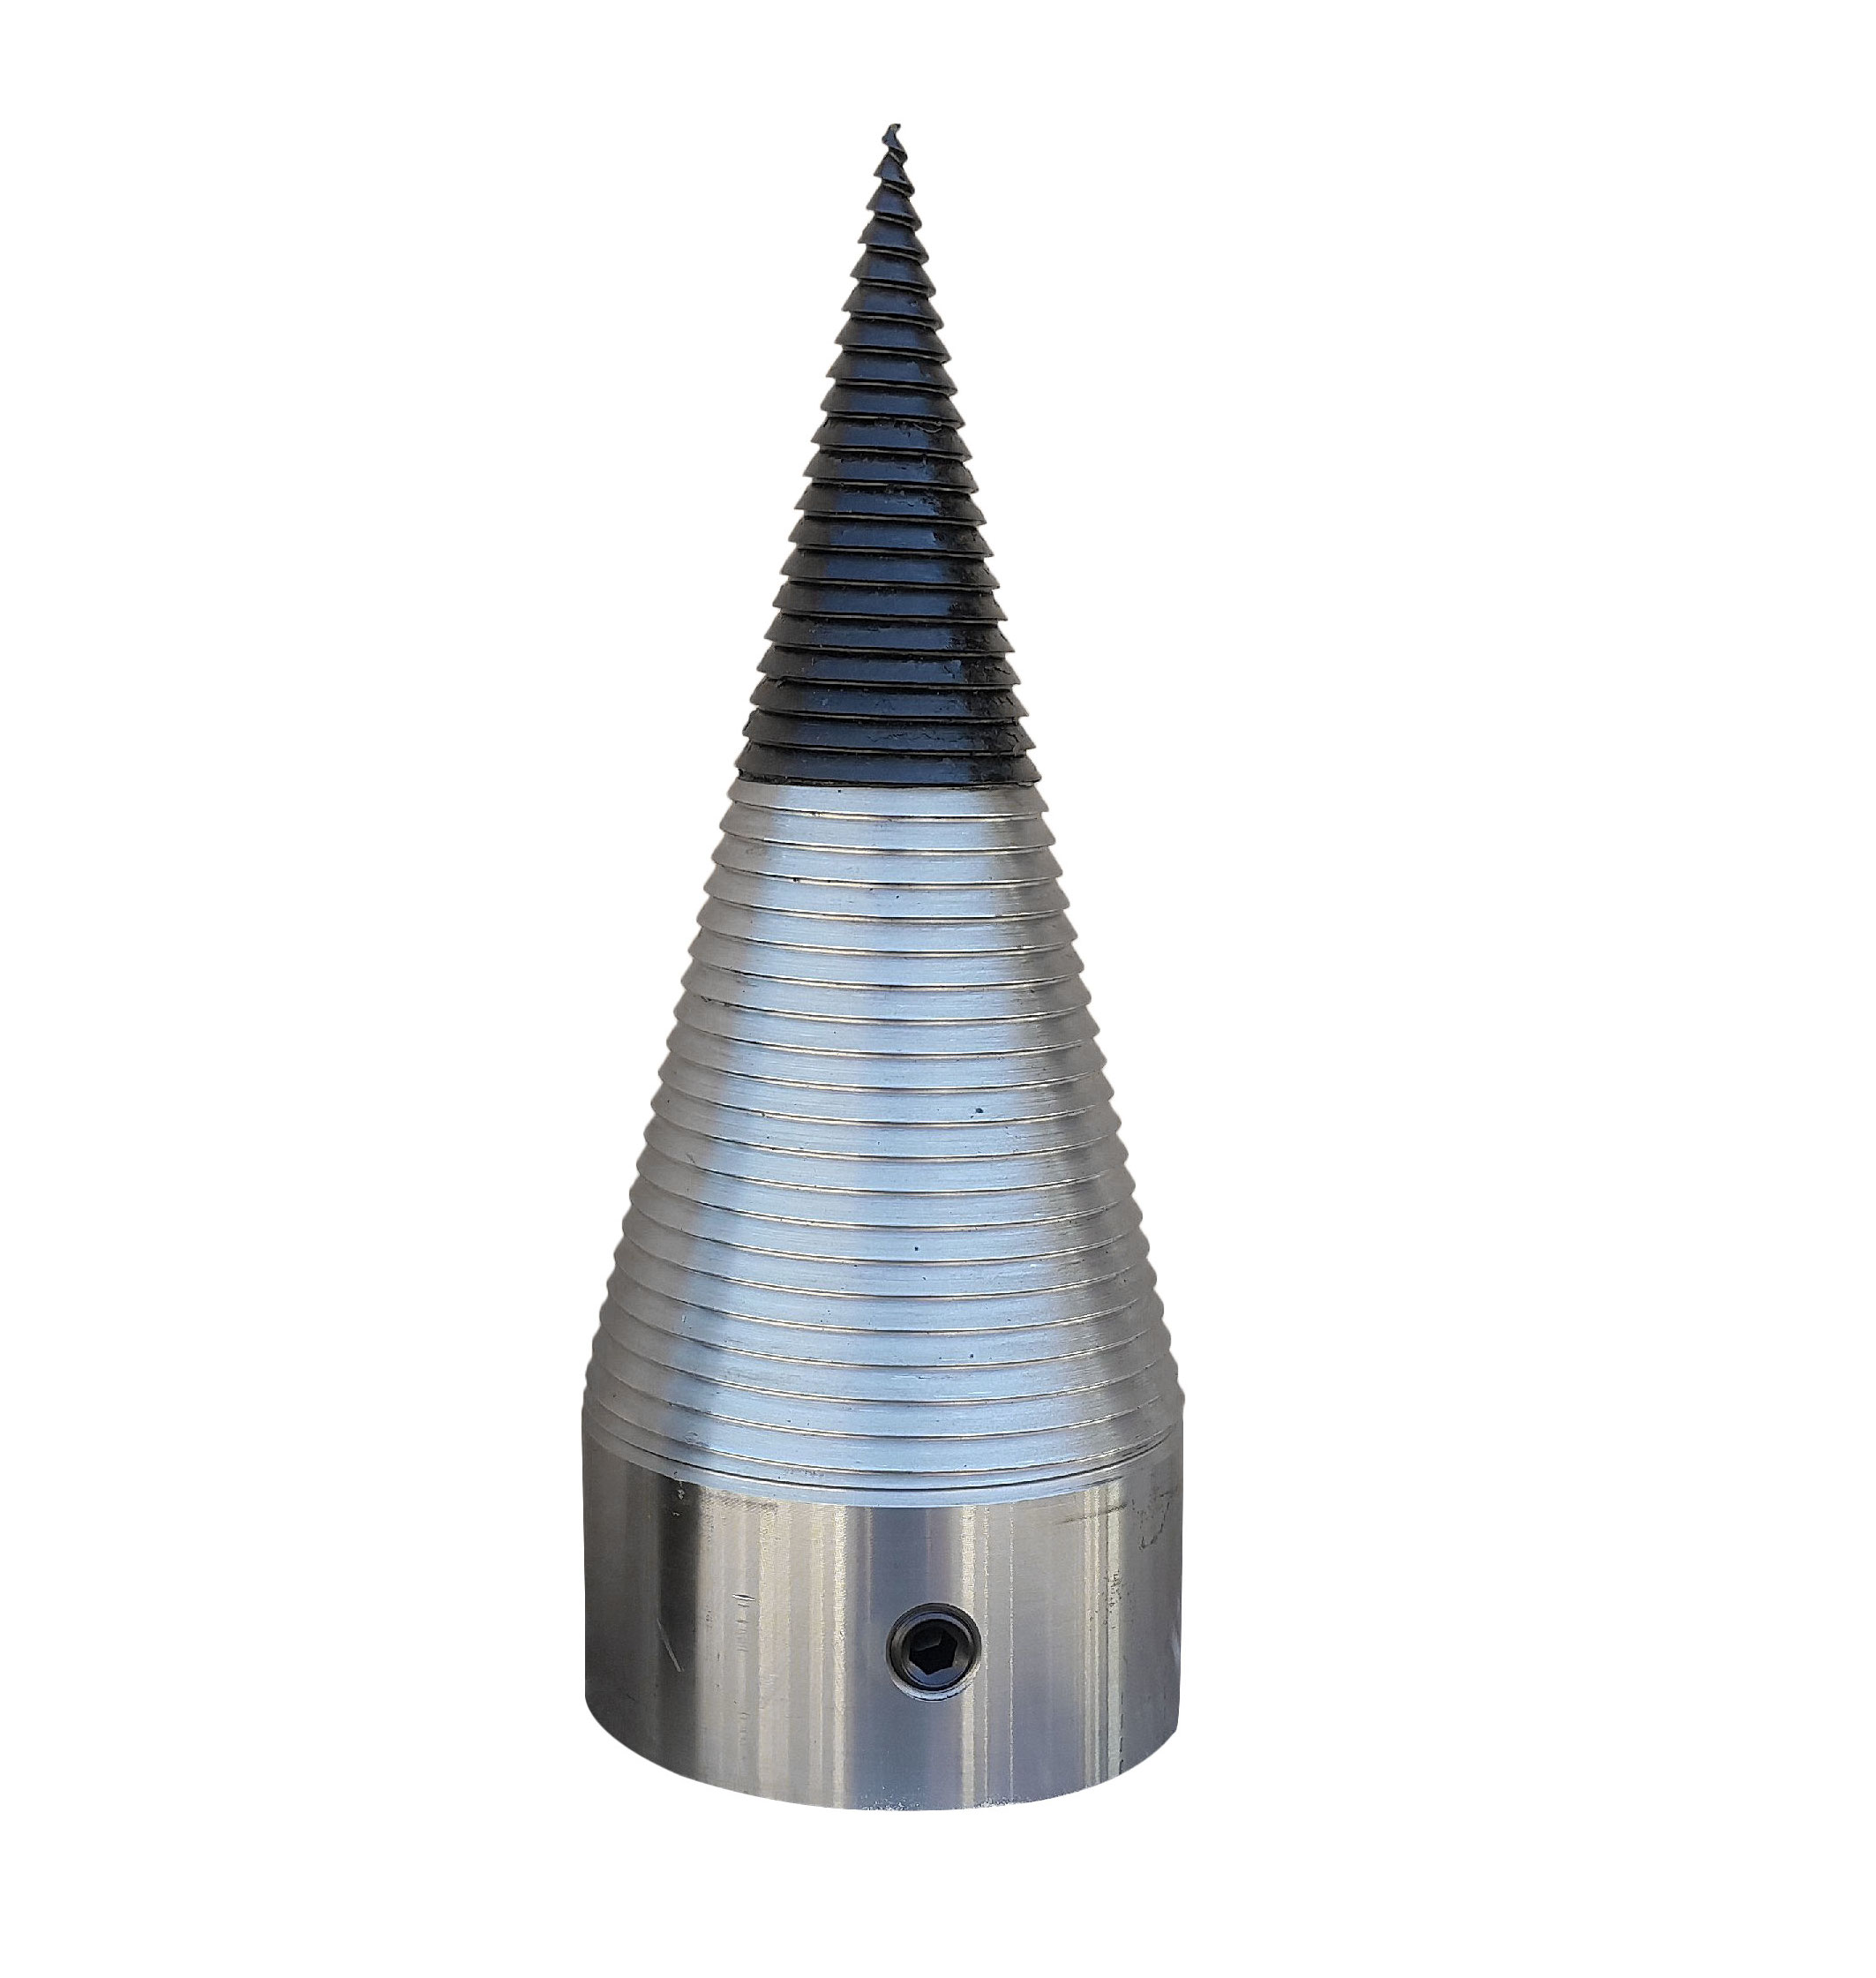 Drillkegel - Spaltkegel Joma-Tech Komplett mit austauschbarer Spitze - Aufnahme Ø 59,2mm